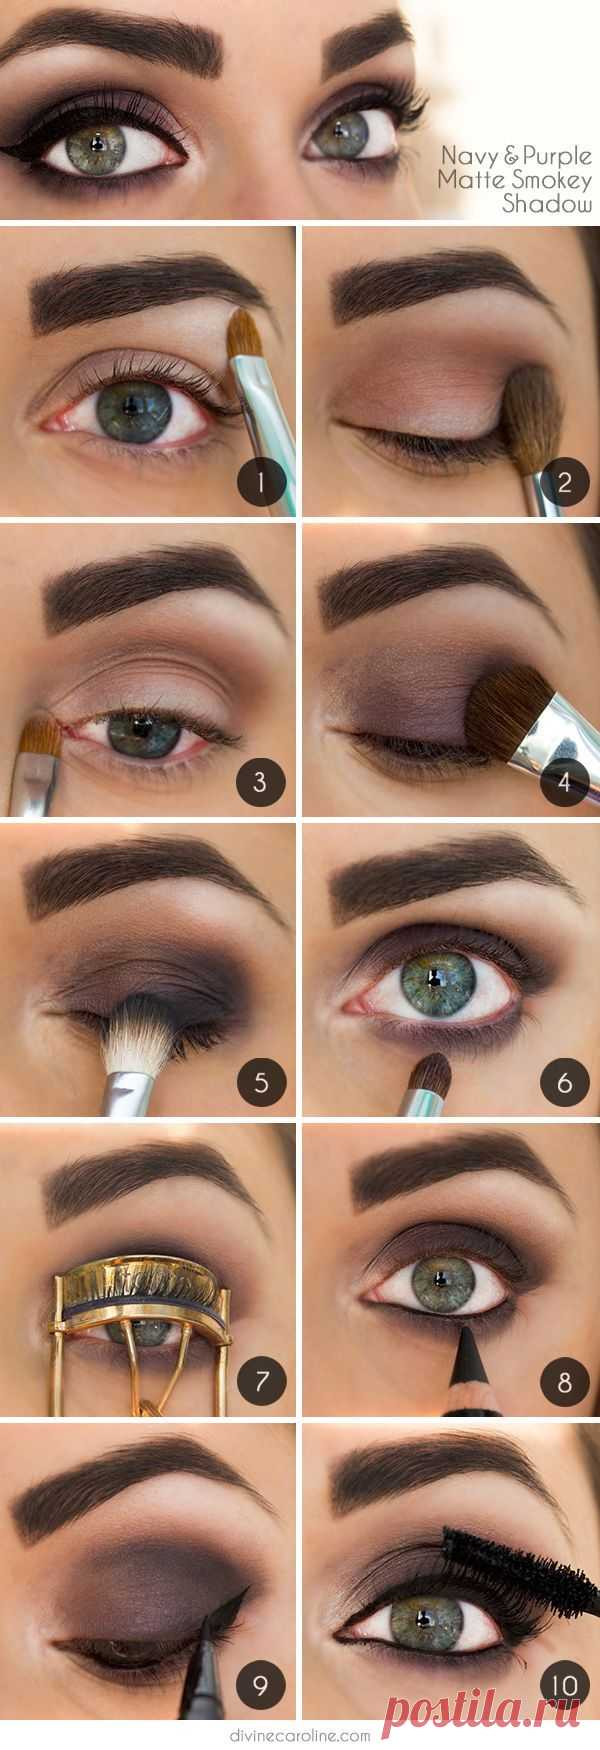 Eye Makeup Must-Try: Navy & Purple Smokey Eye